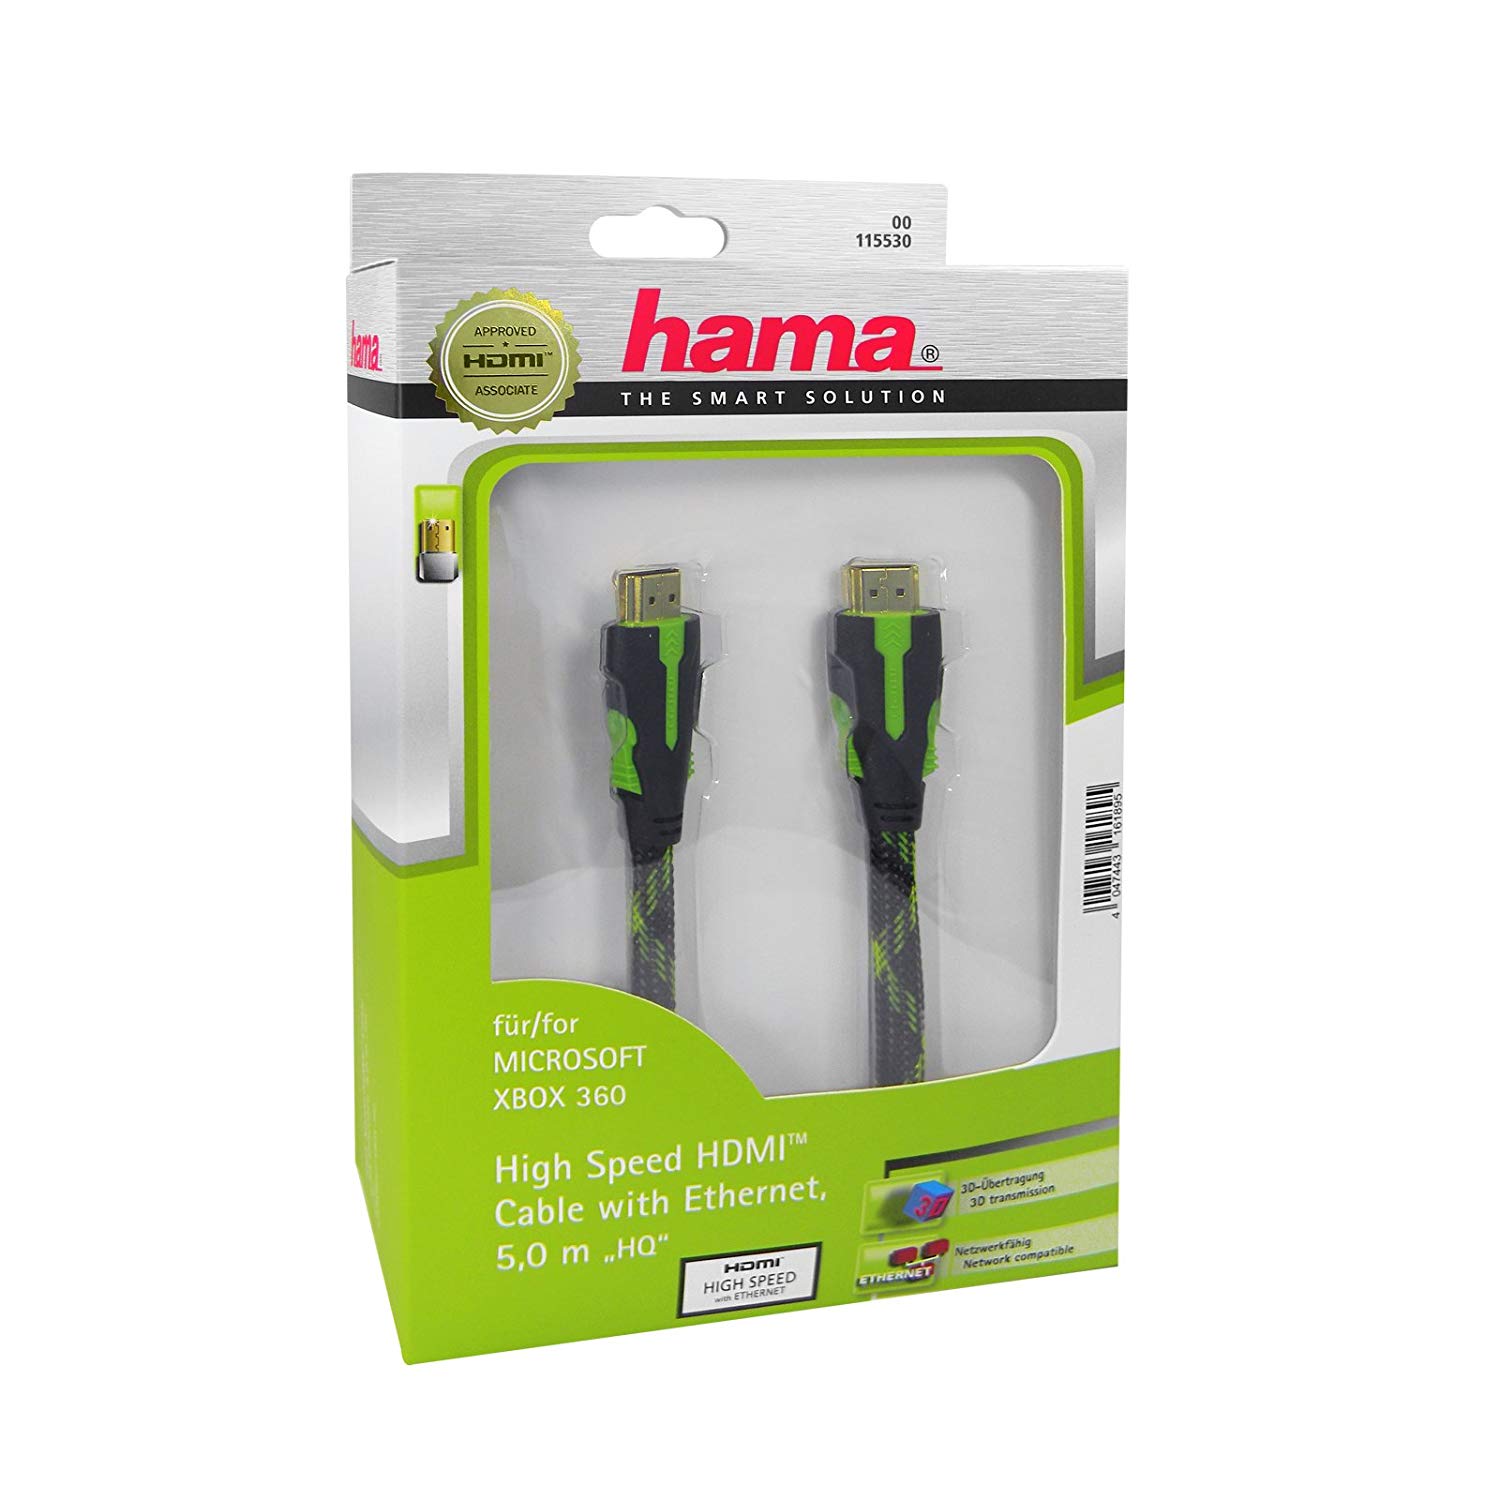 Hama High Speed HDMI Cable With Eternet 5m HQ - 115530 - Xbox 360 Kiegészítők